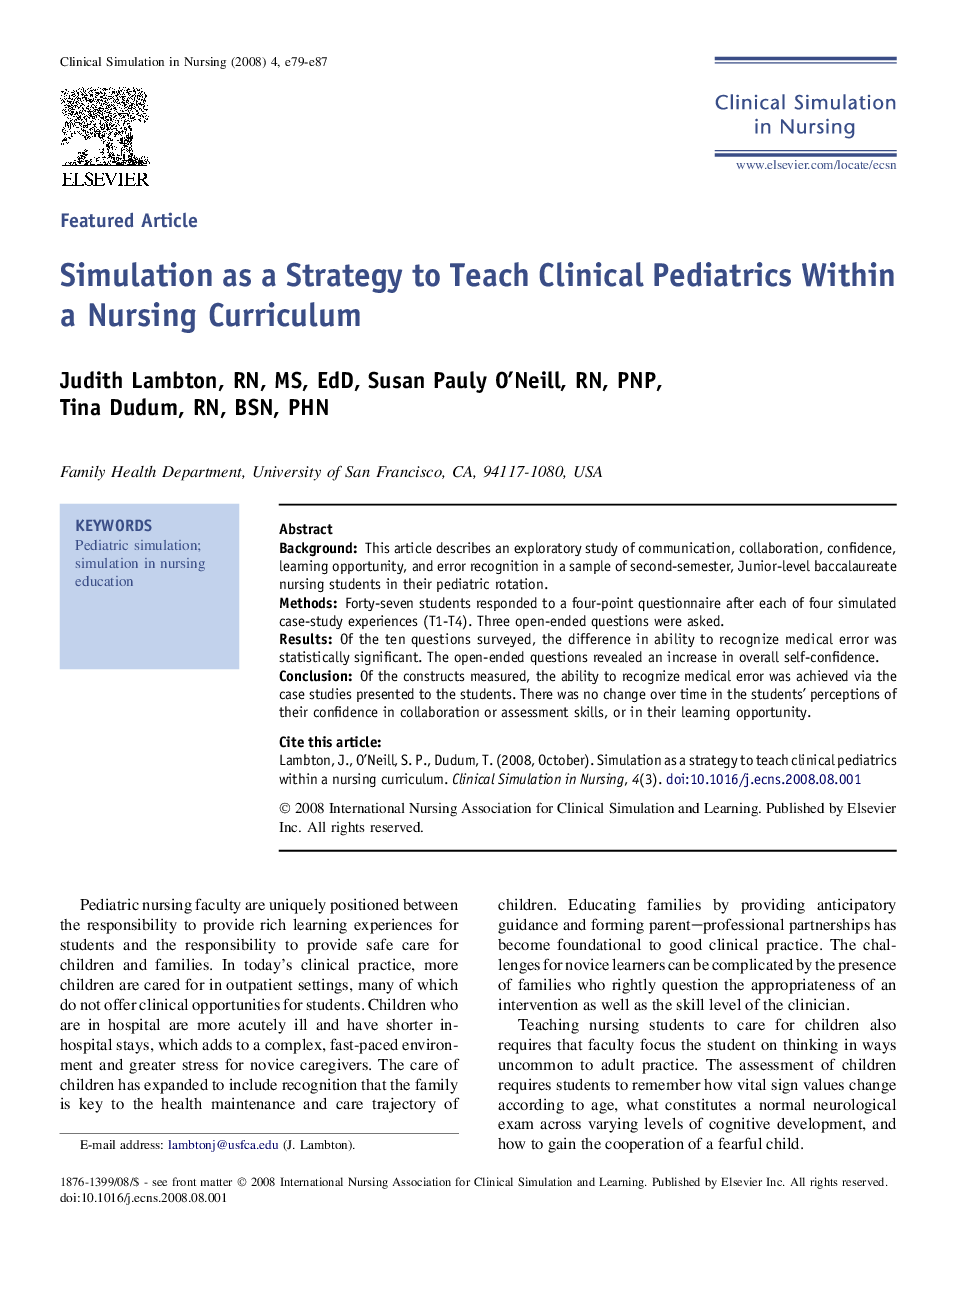 Simulation as a Strategy to Teach Clinical Pediatrics Within a Nursing Curriculum 